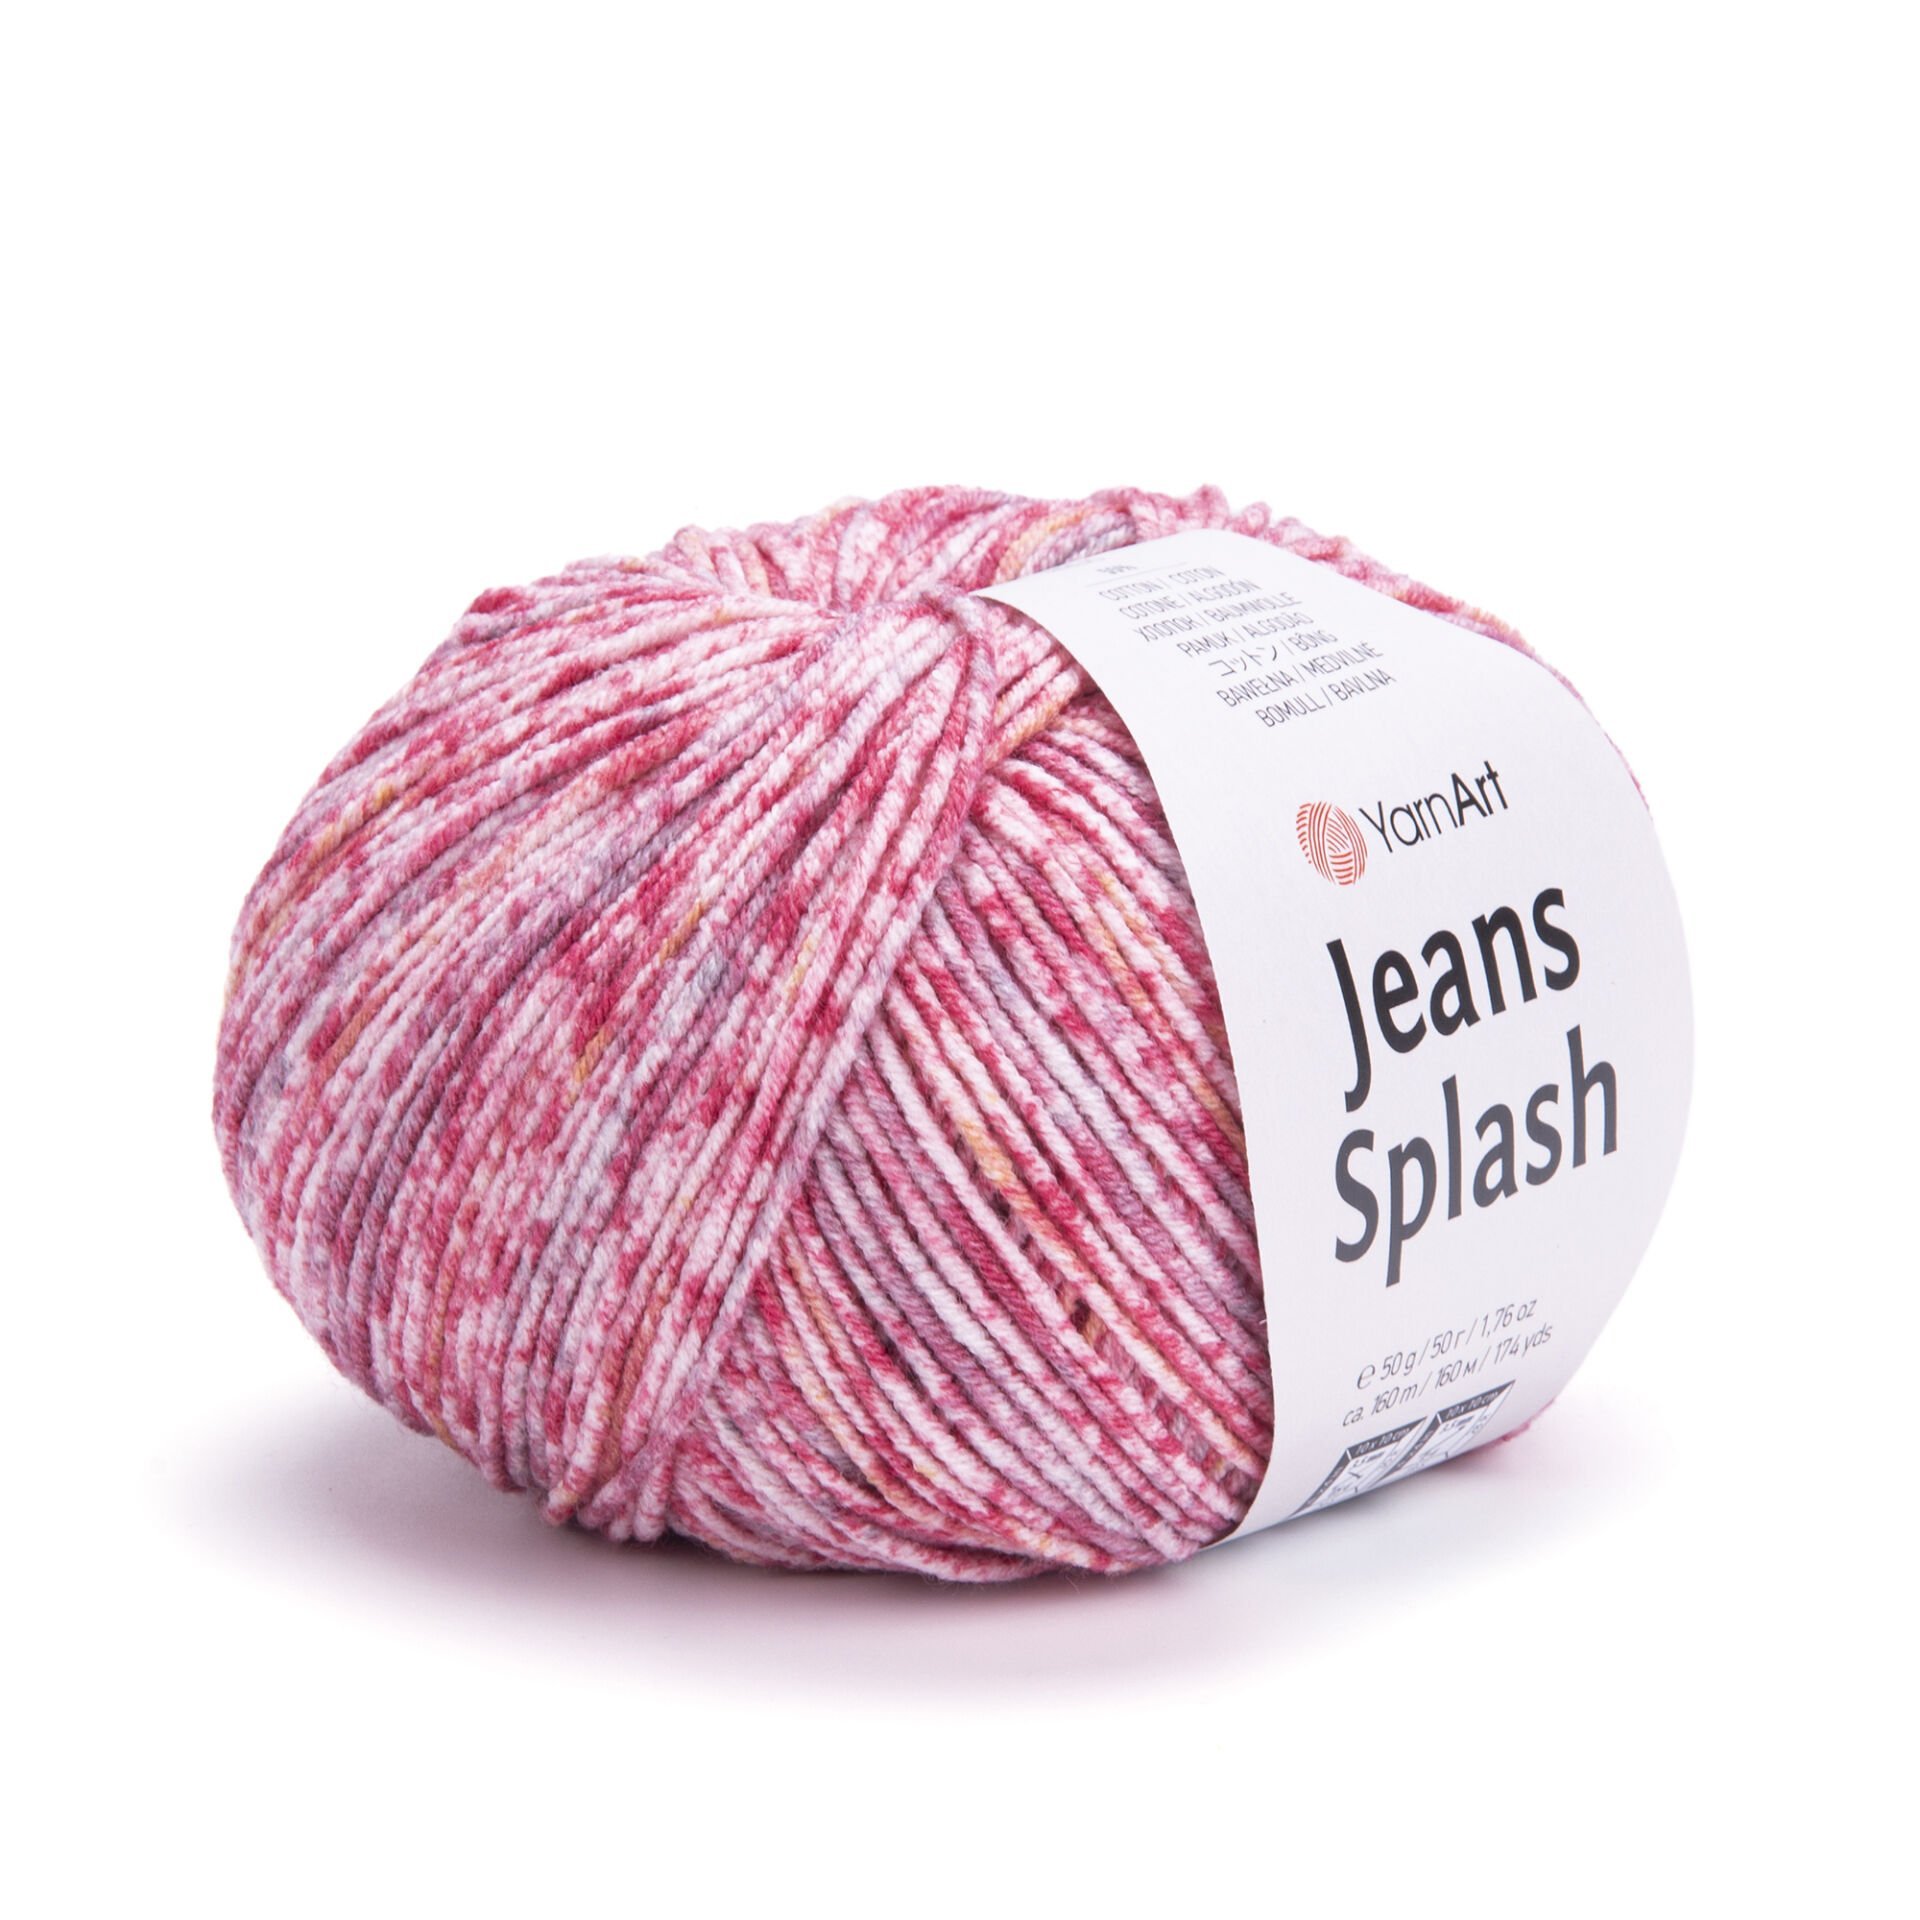  YARNART Jeans Crazy - Multicolor Knitting Yarn, Baby